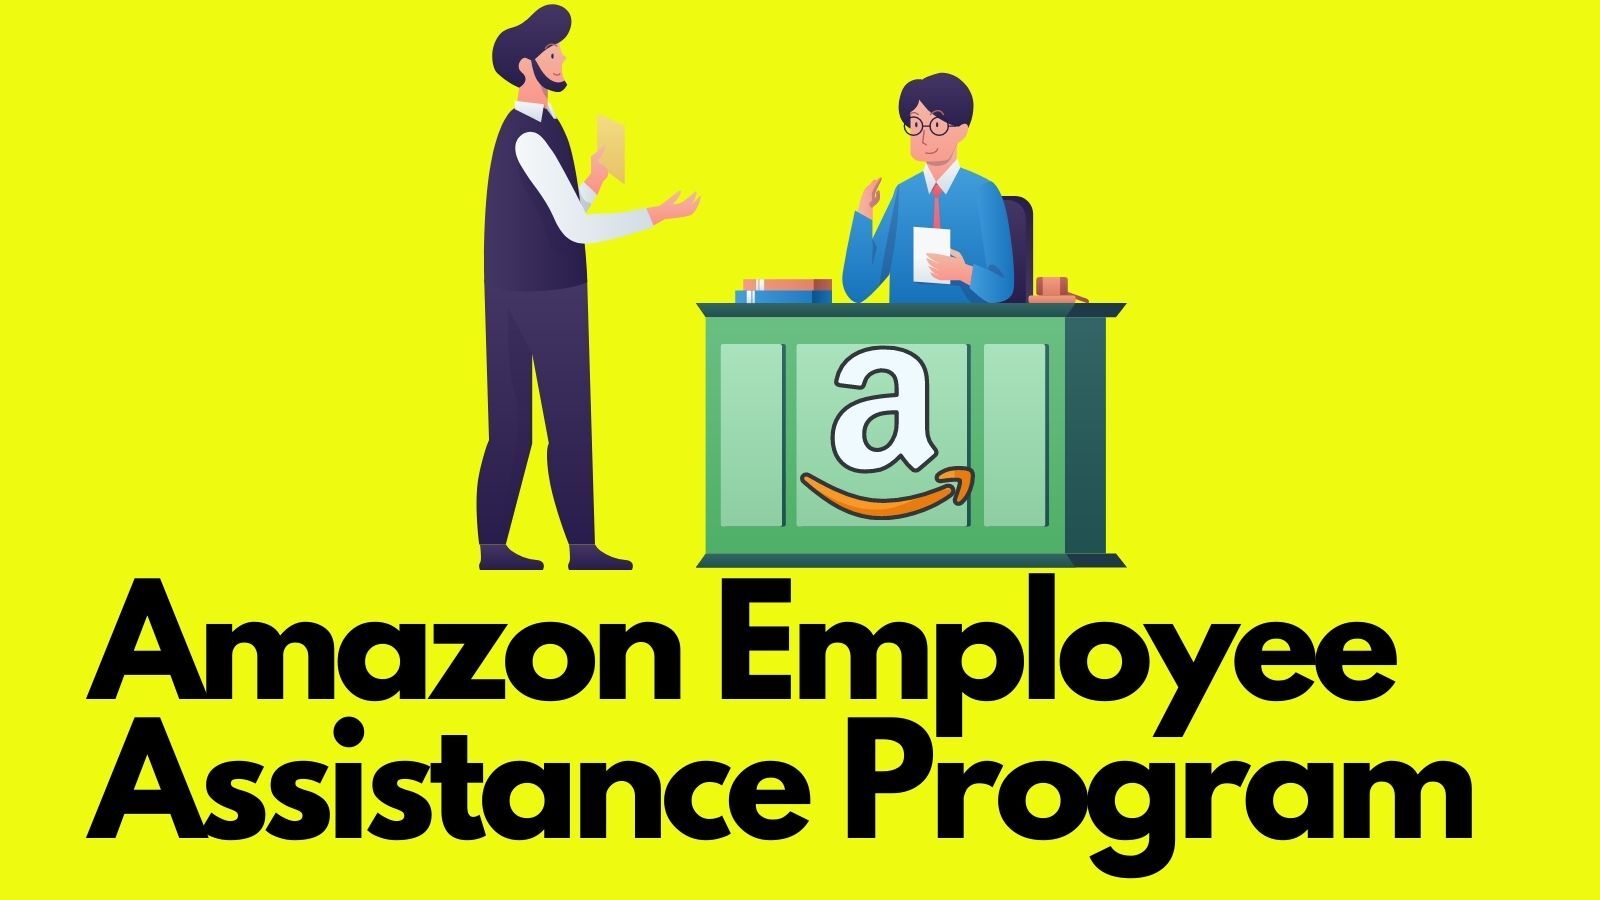 Amazon Employee Assistance Program (Something You Should Know)